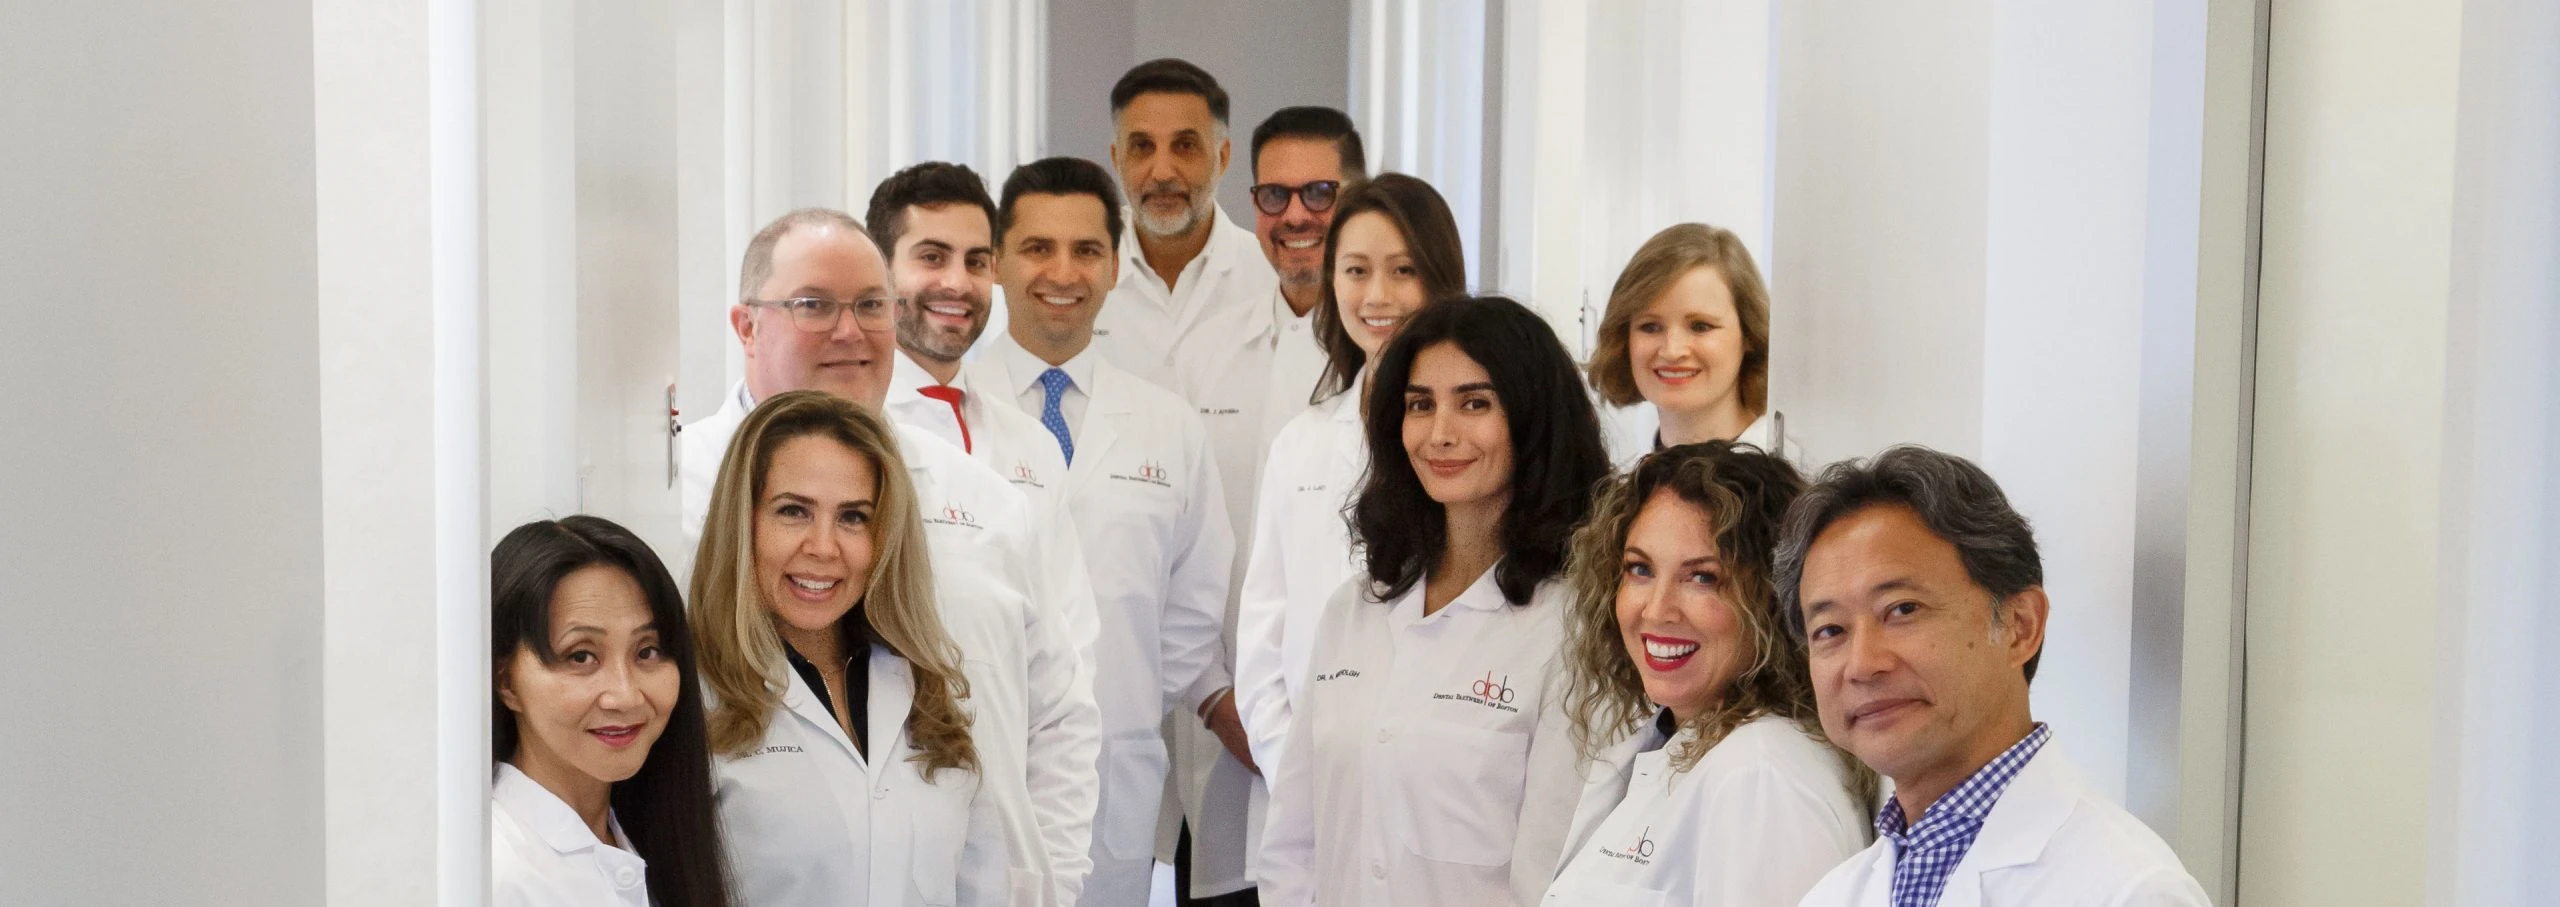 Dental Partners of Boston Doctors